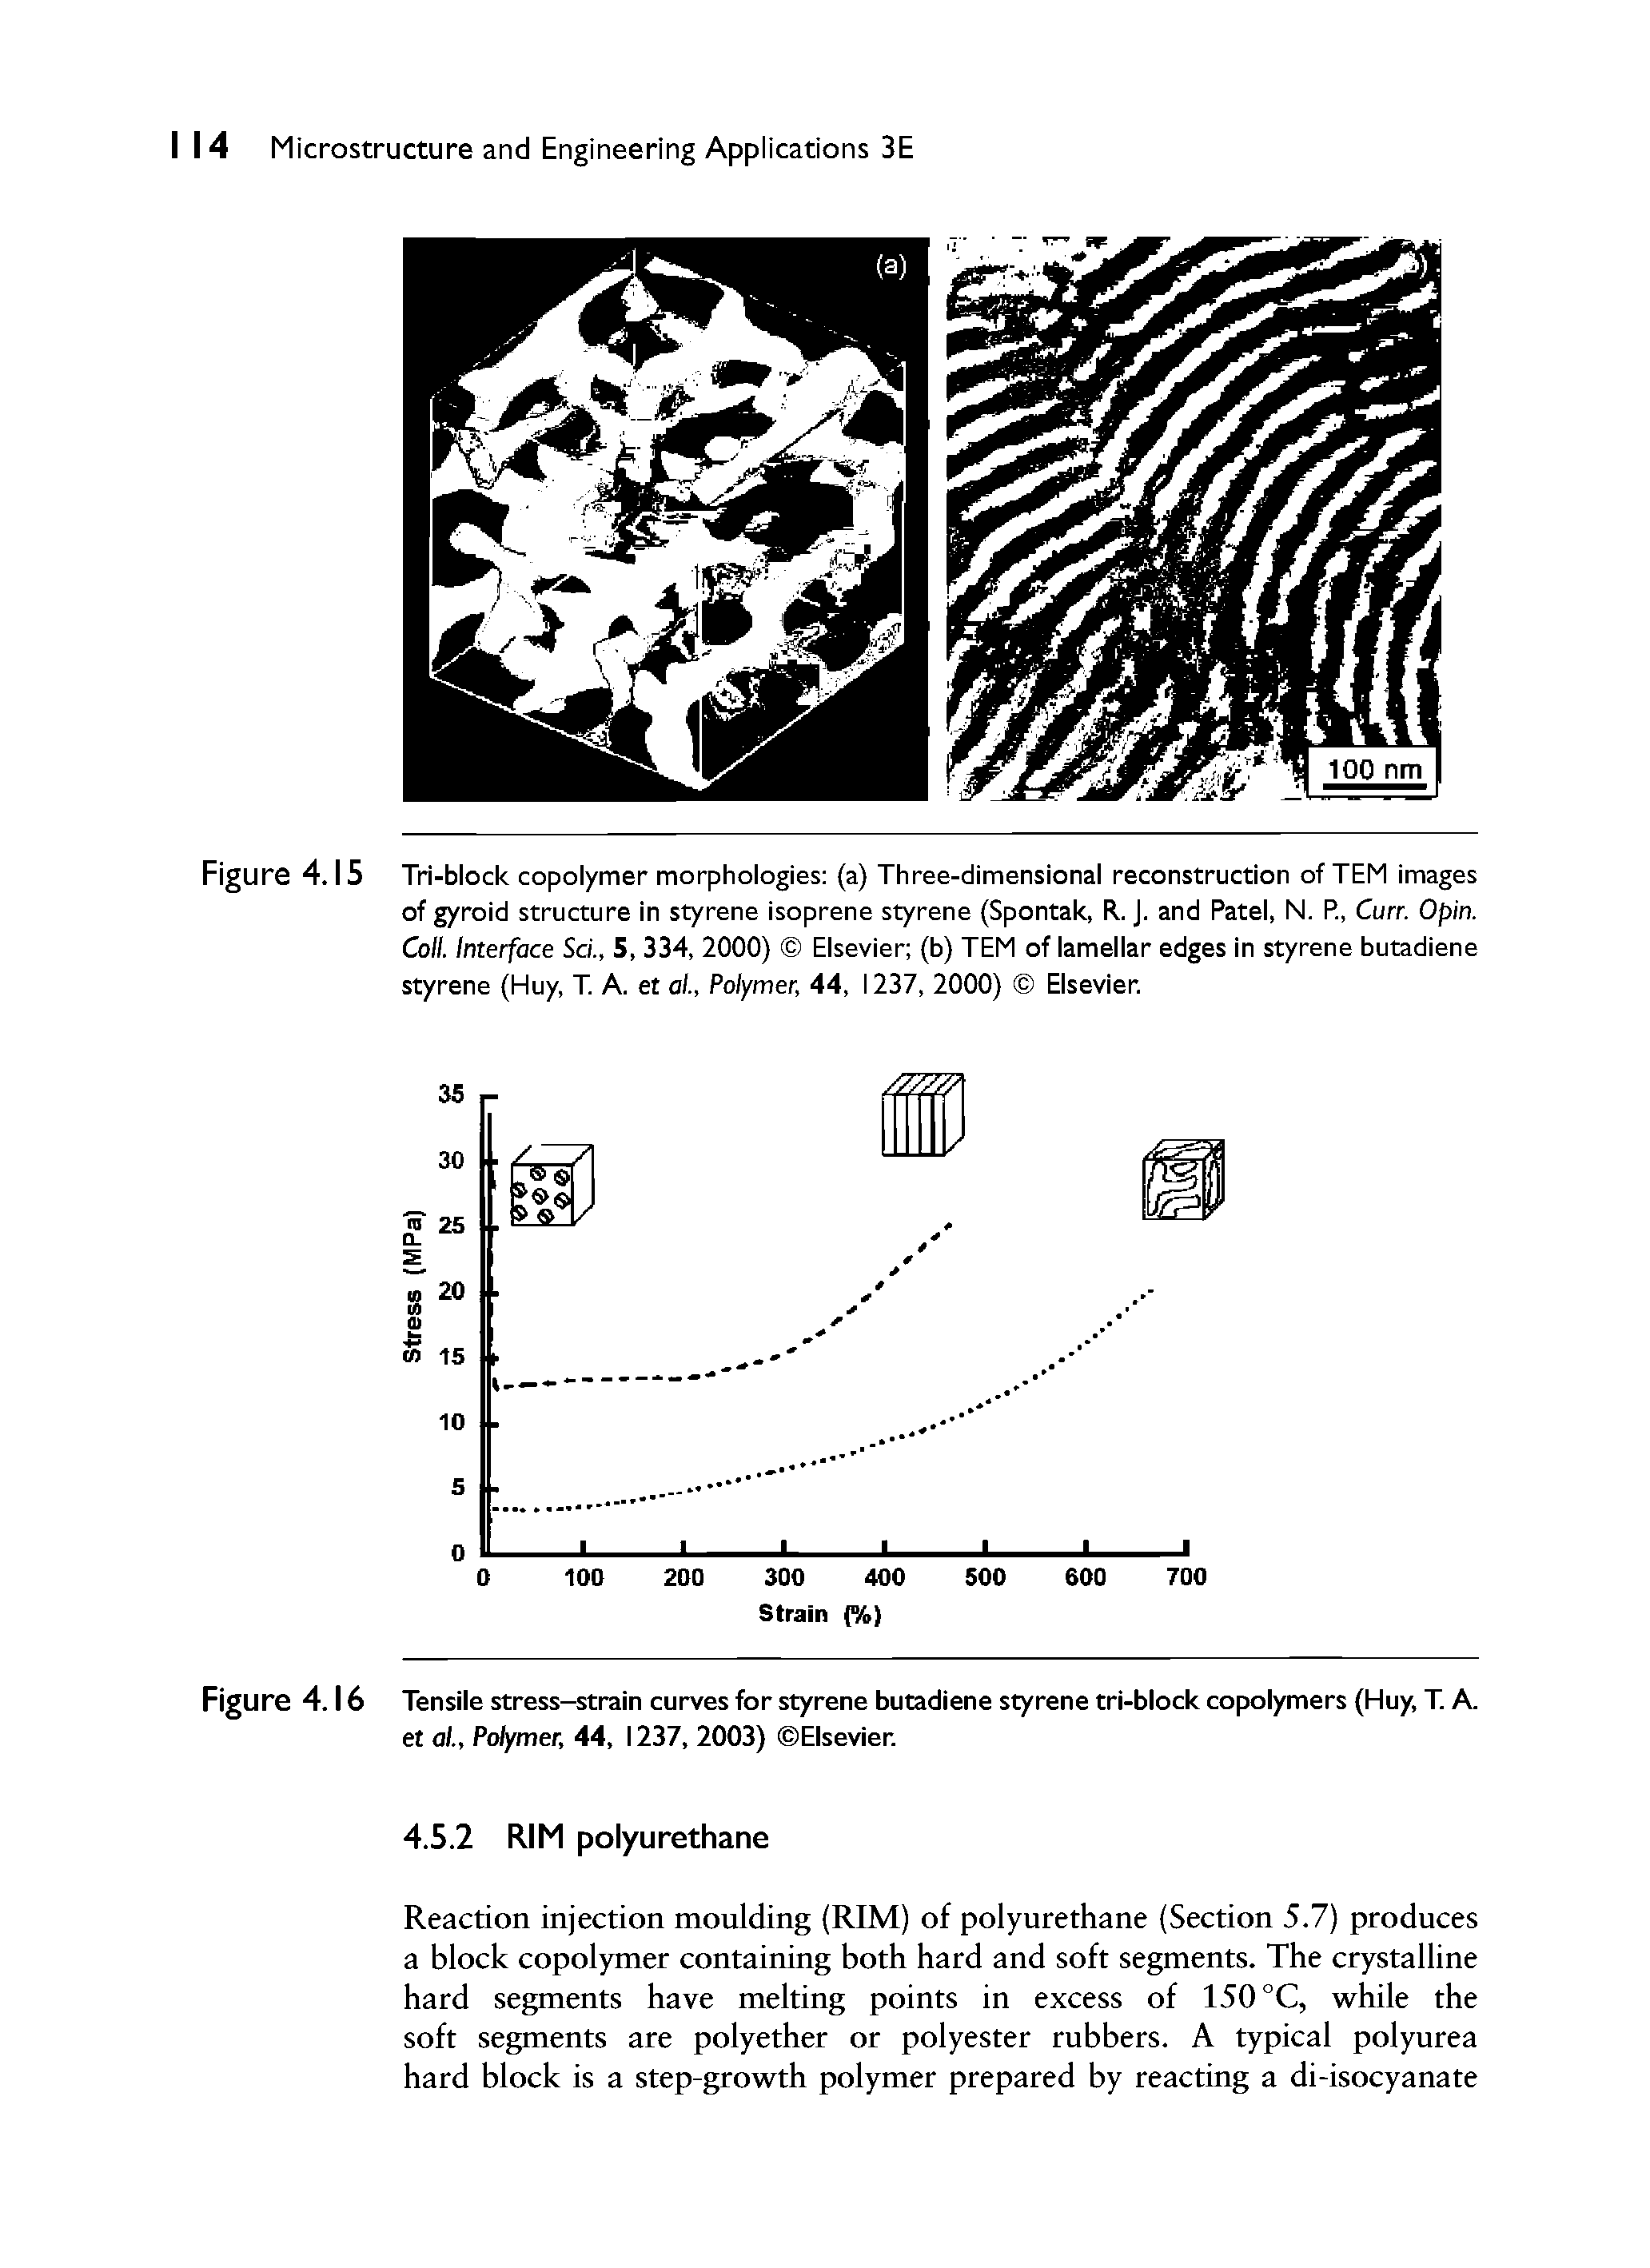 Figure 4.16 Tensile stress-strain curves for styrene butadiene styrene tri-block copralymers (Huy, T. A et al., Polymer, 44, 1237, 2003) Elsevier.